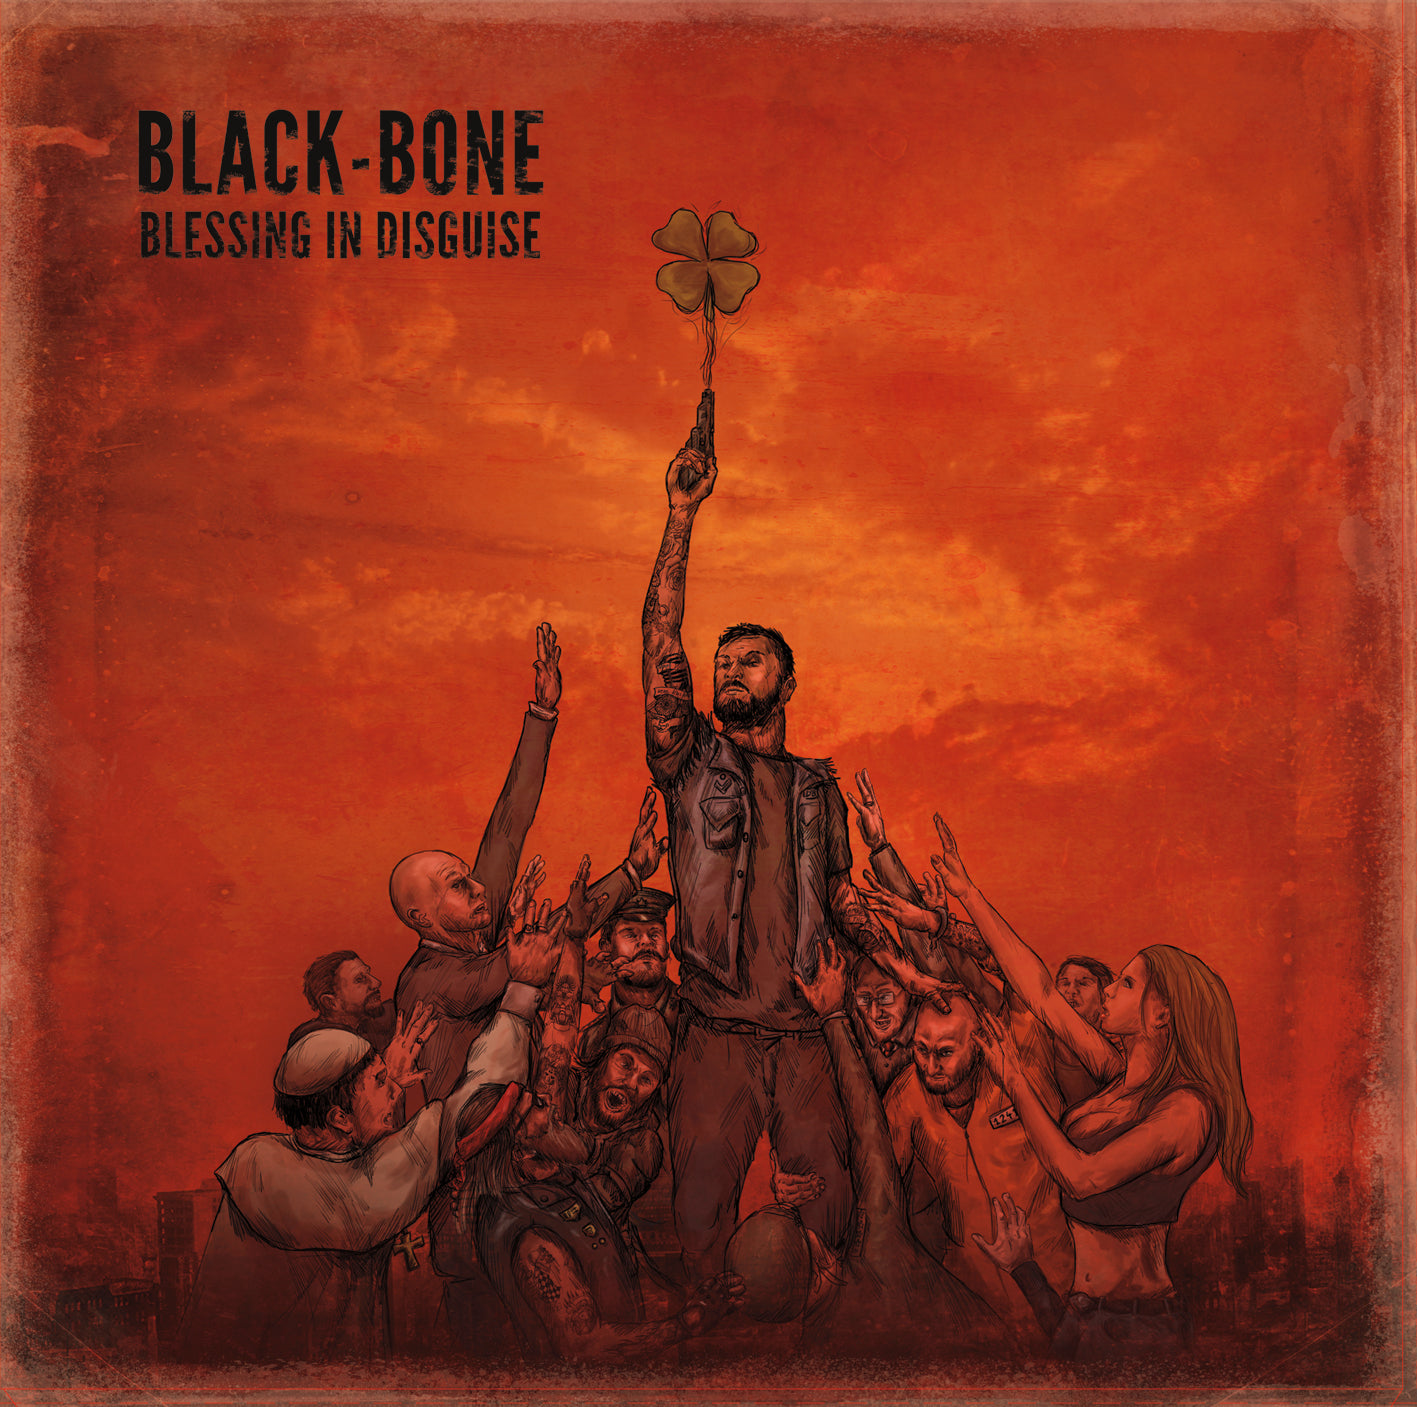 Black-Bone "Blessing In Disguise" LP